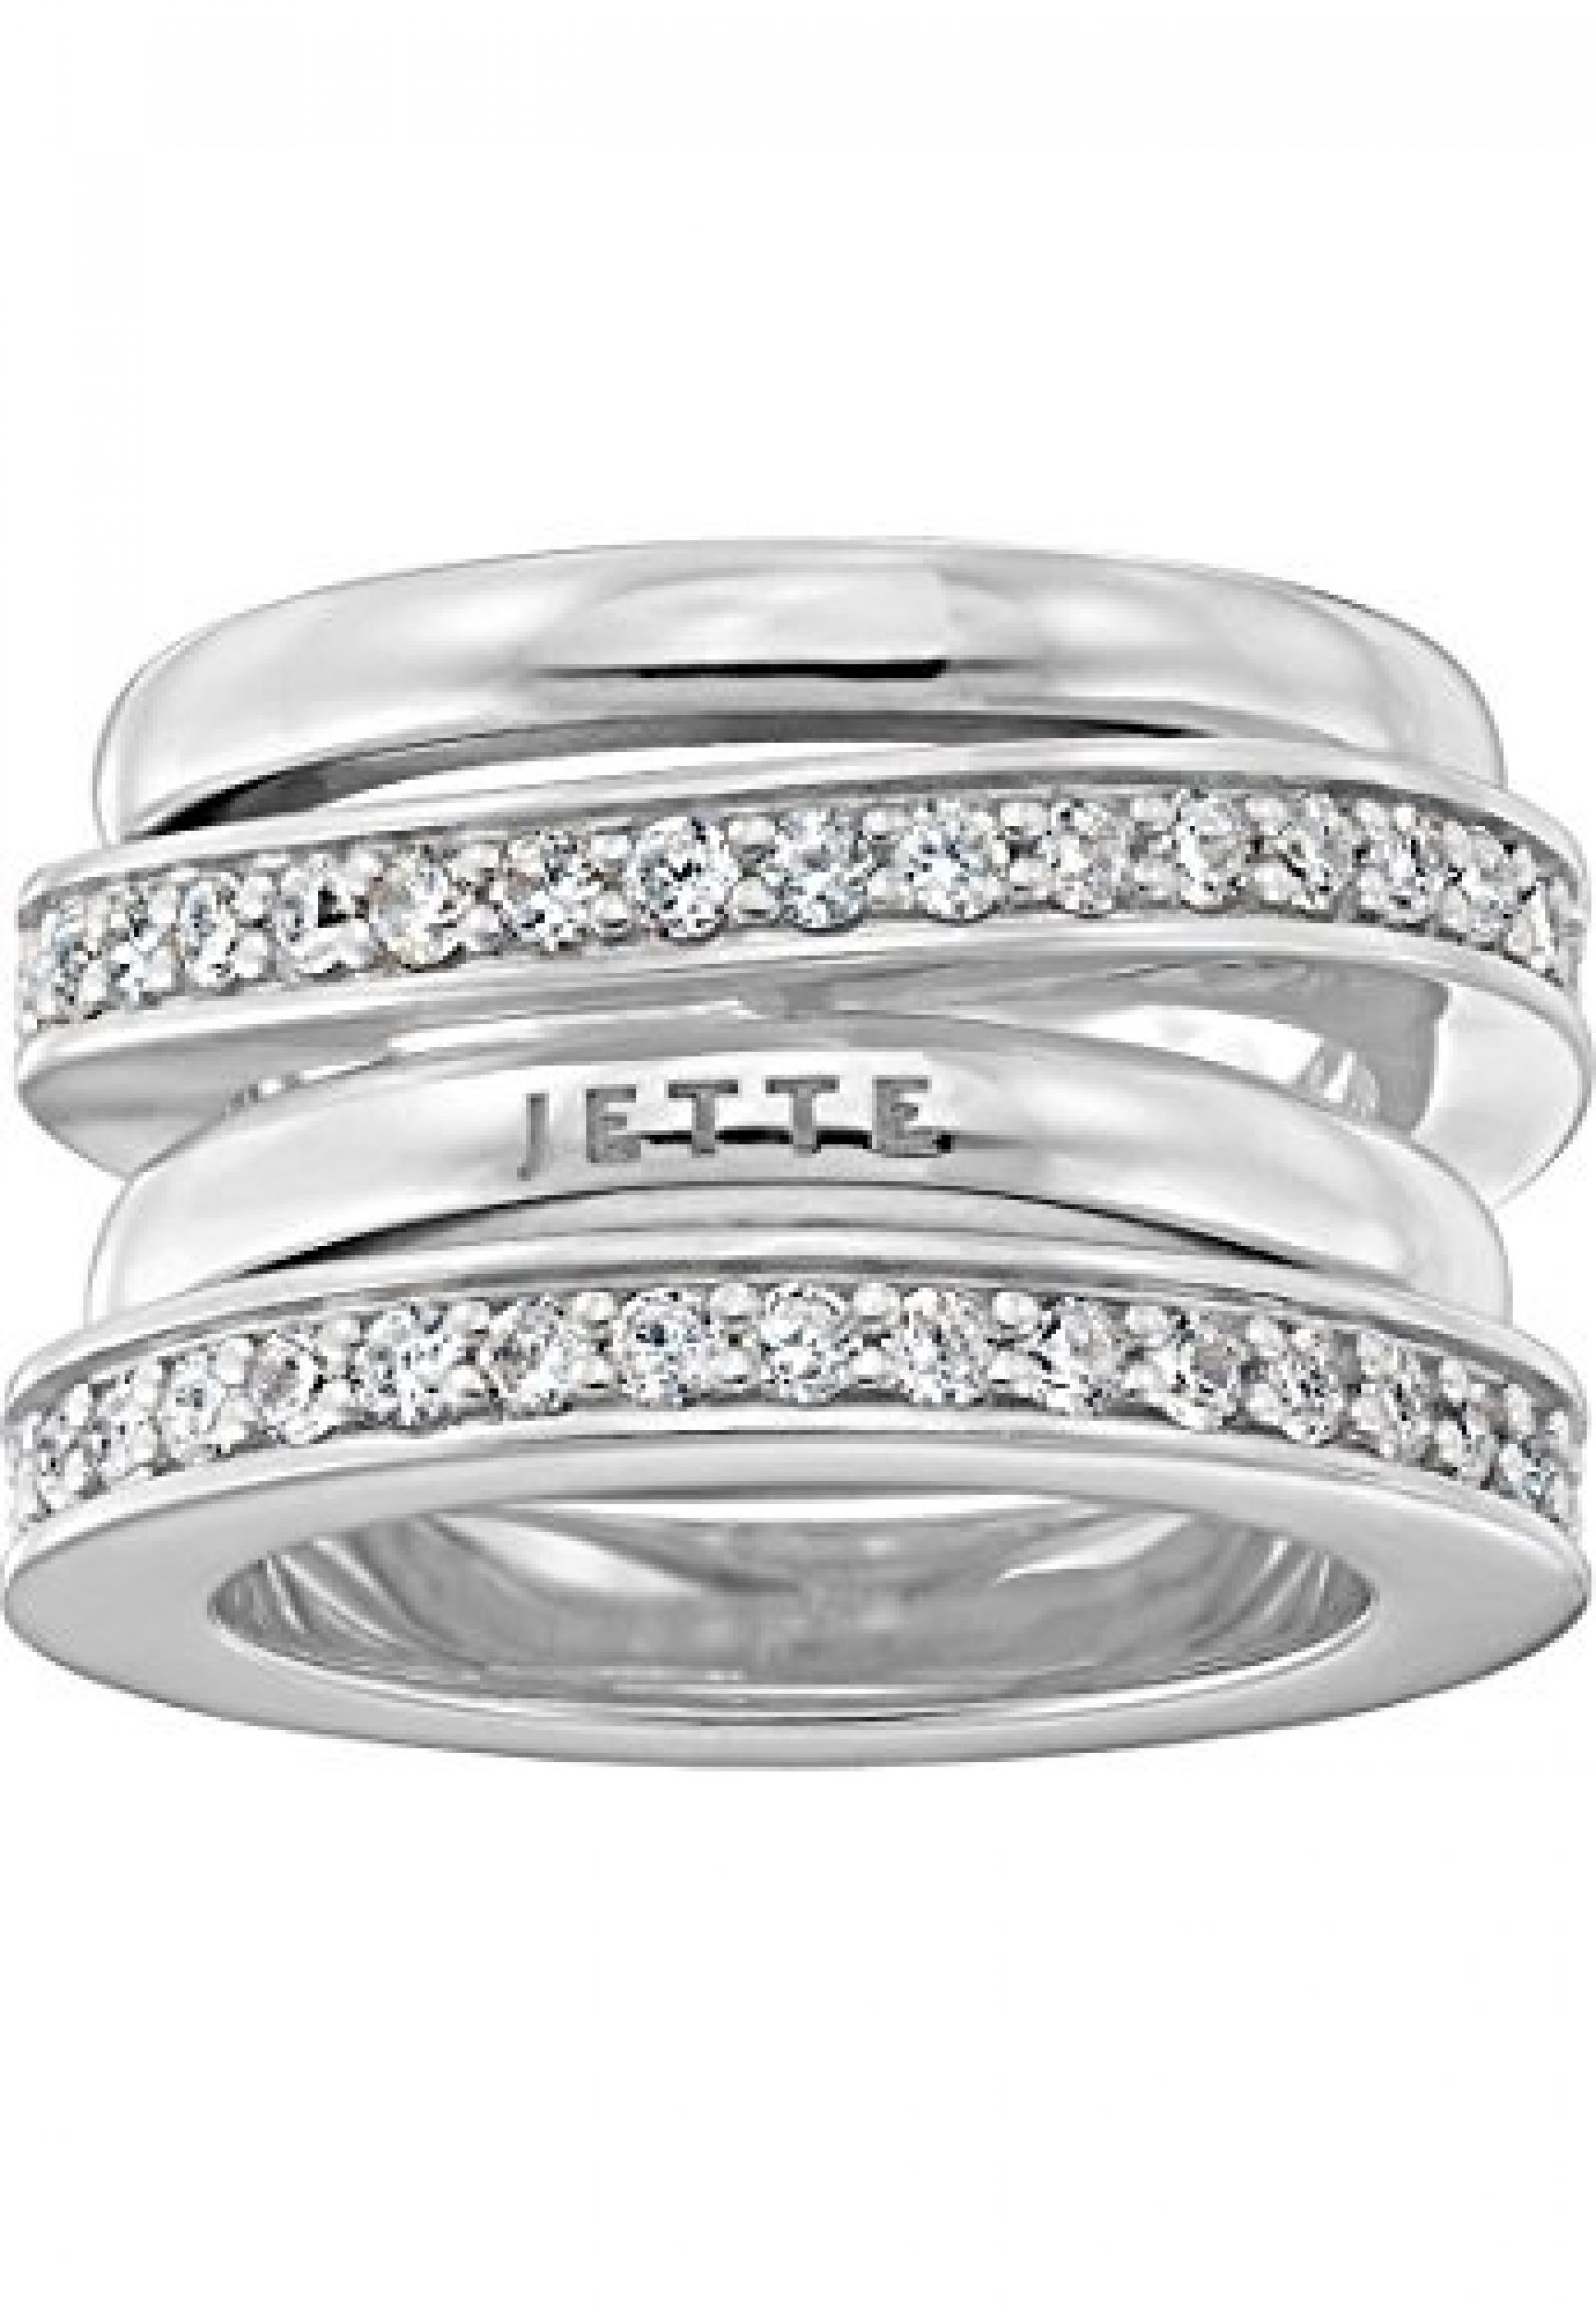 JETTE Silver Damen-Ring FLOW 925er Silber 58 Zirkonia (silber) 